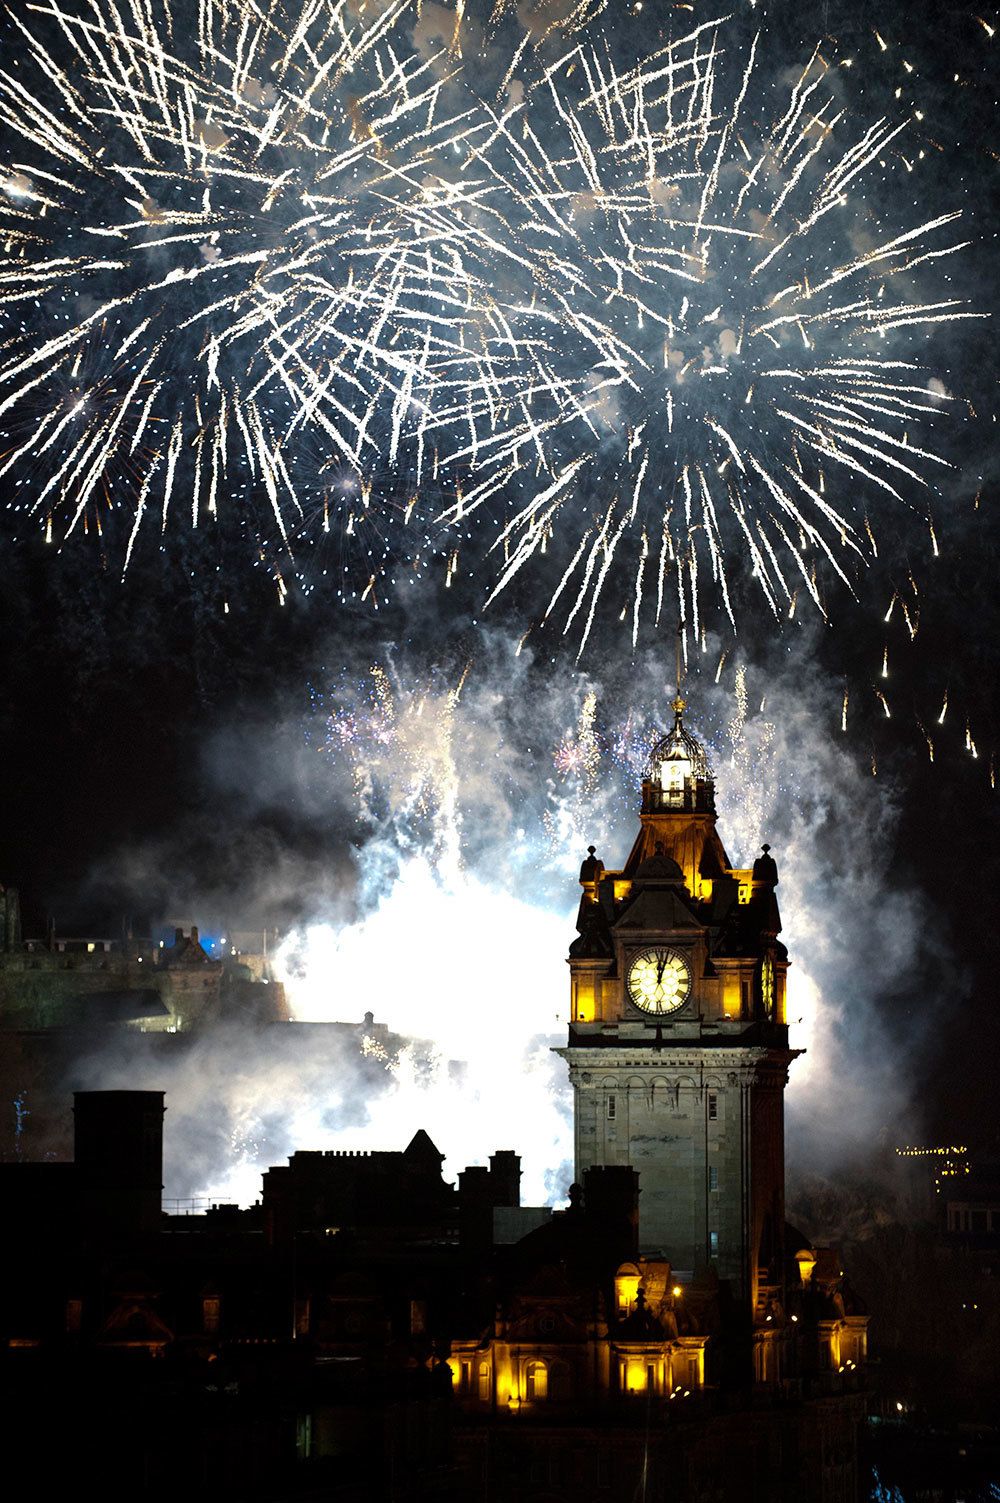 New Year Edinburghs Hogmanay 2013 Midnight Moment Ii Credit Chris Watt